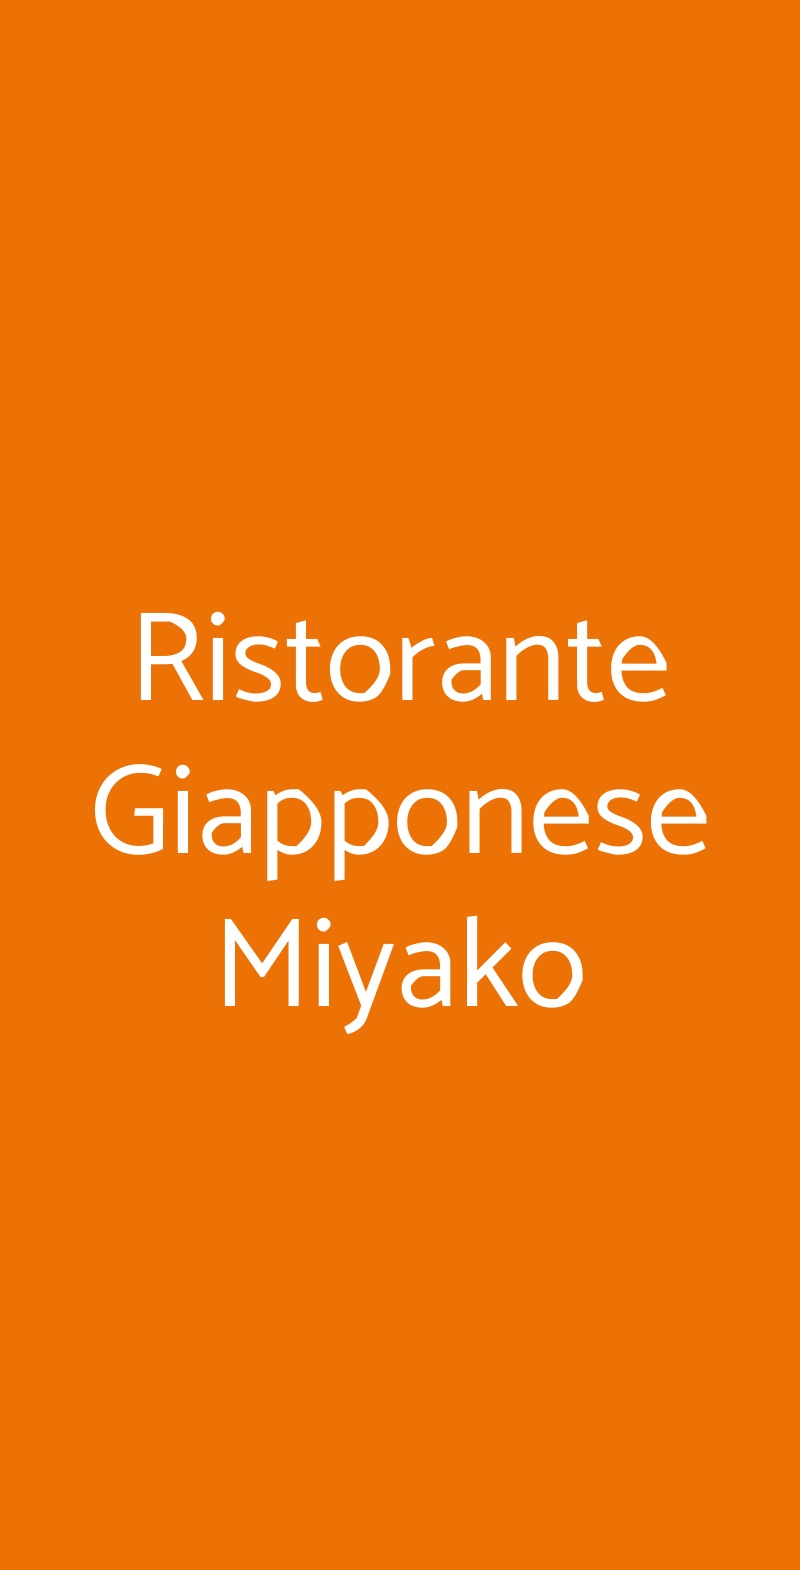 Ristorante Giapponese Miyako Marina di Ravenna menù 1 pagina